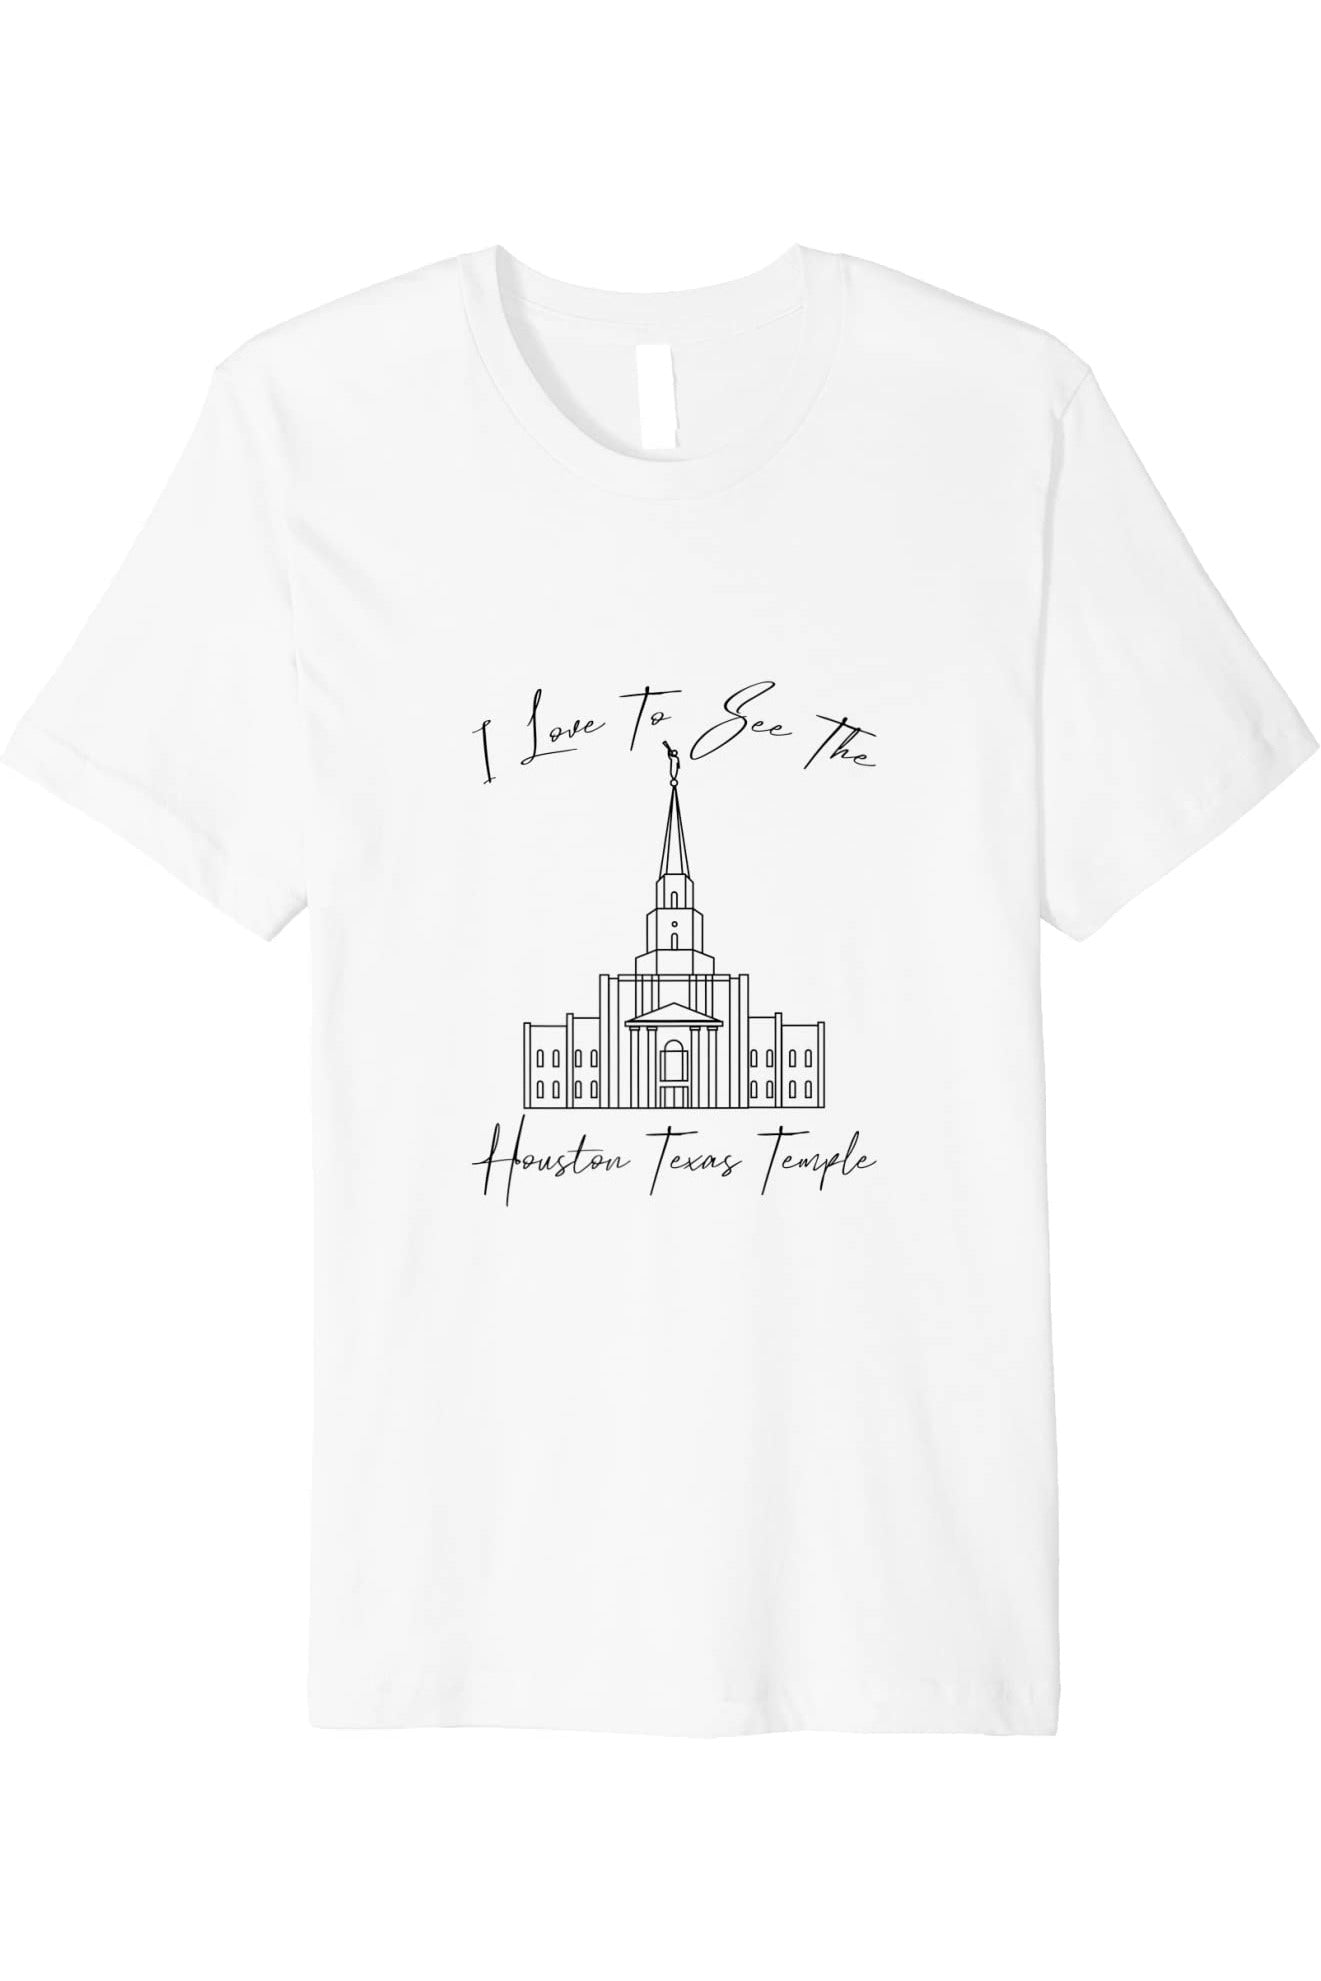 Houston Texas Temple T-Shirt - Premium - Calligraphy Style (English) US